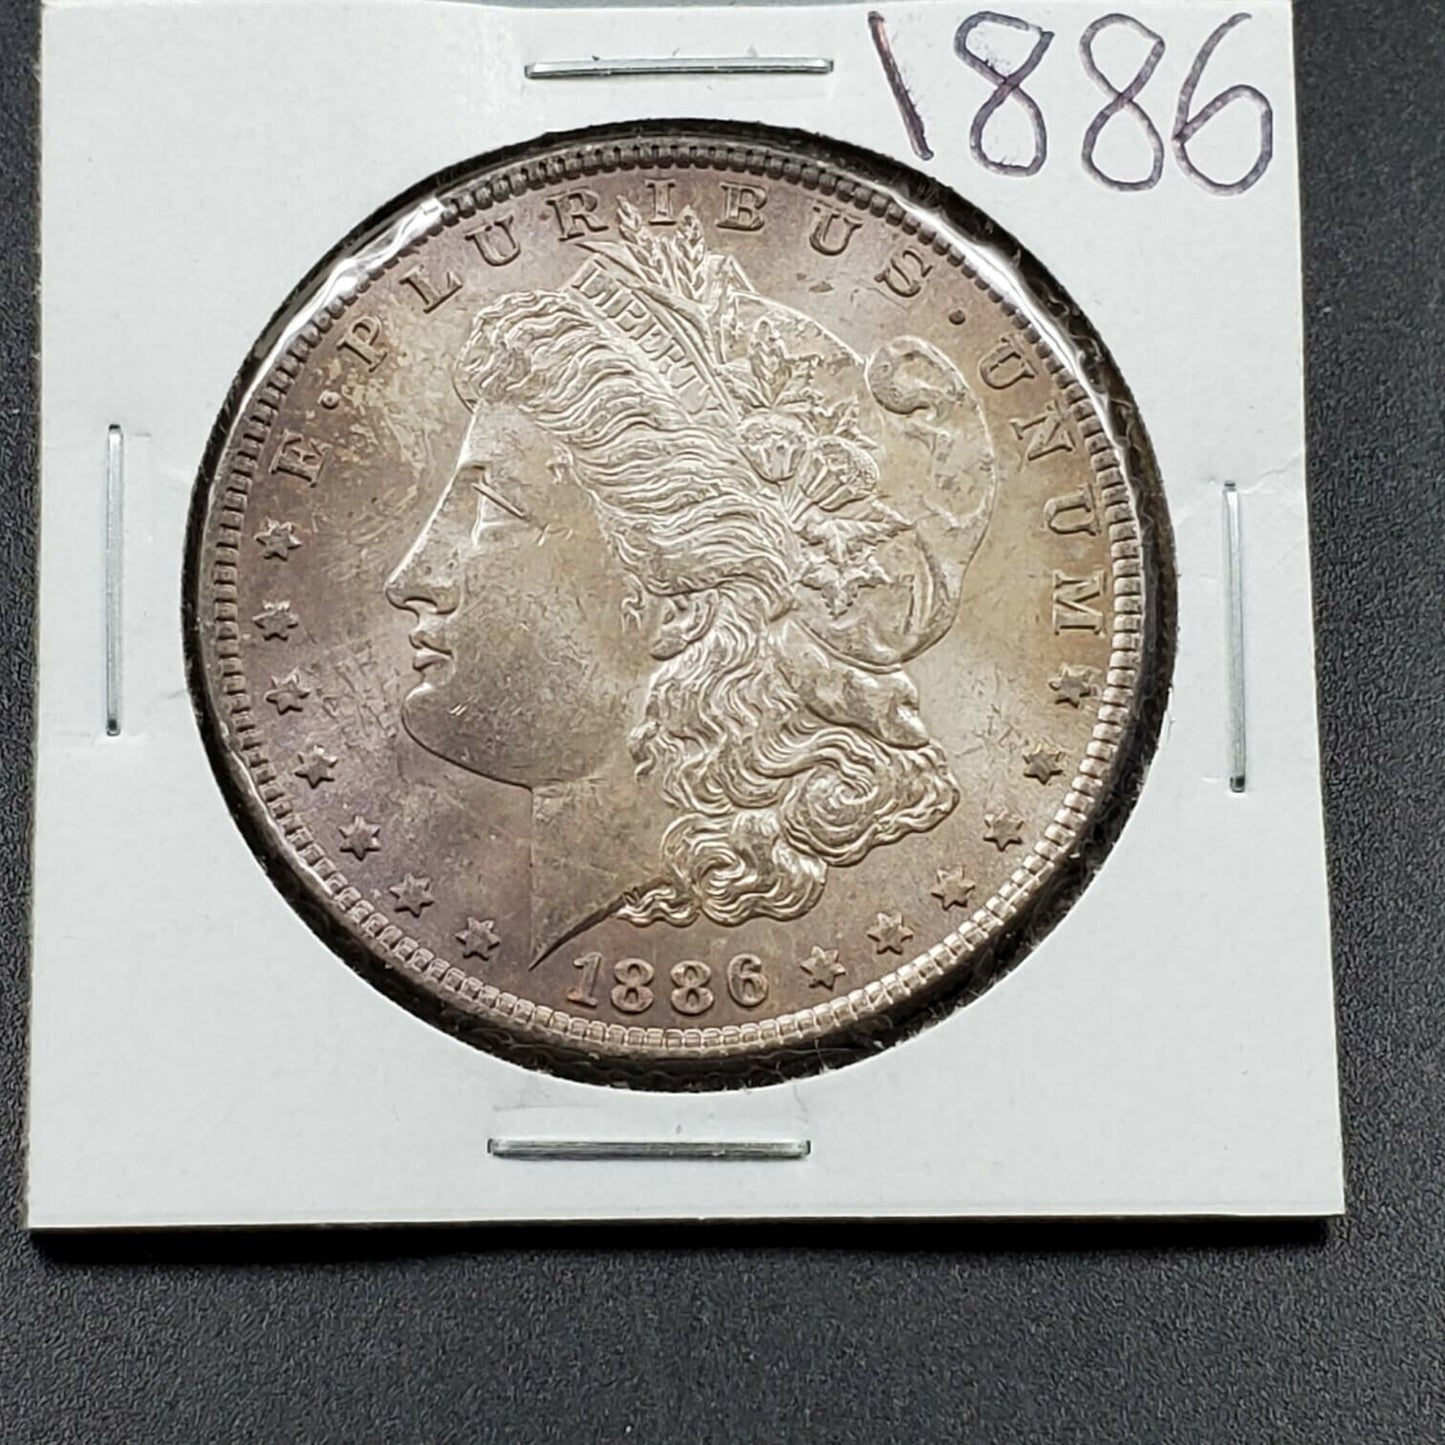 1886 P $1 Morgan Silver Dollar Coin Choice BU Uncirculated Neat Toning Toner